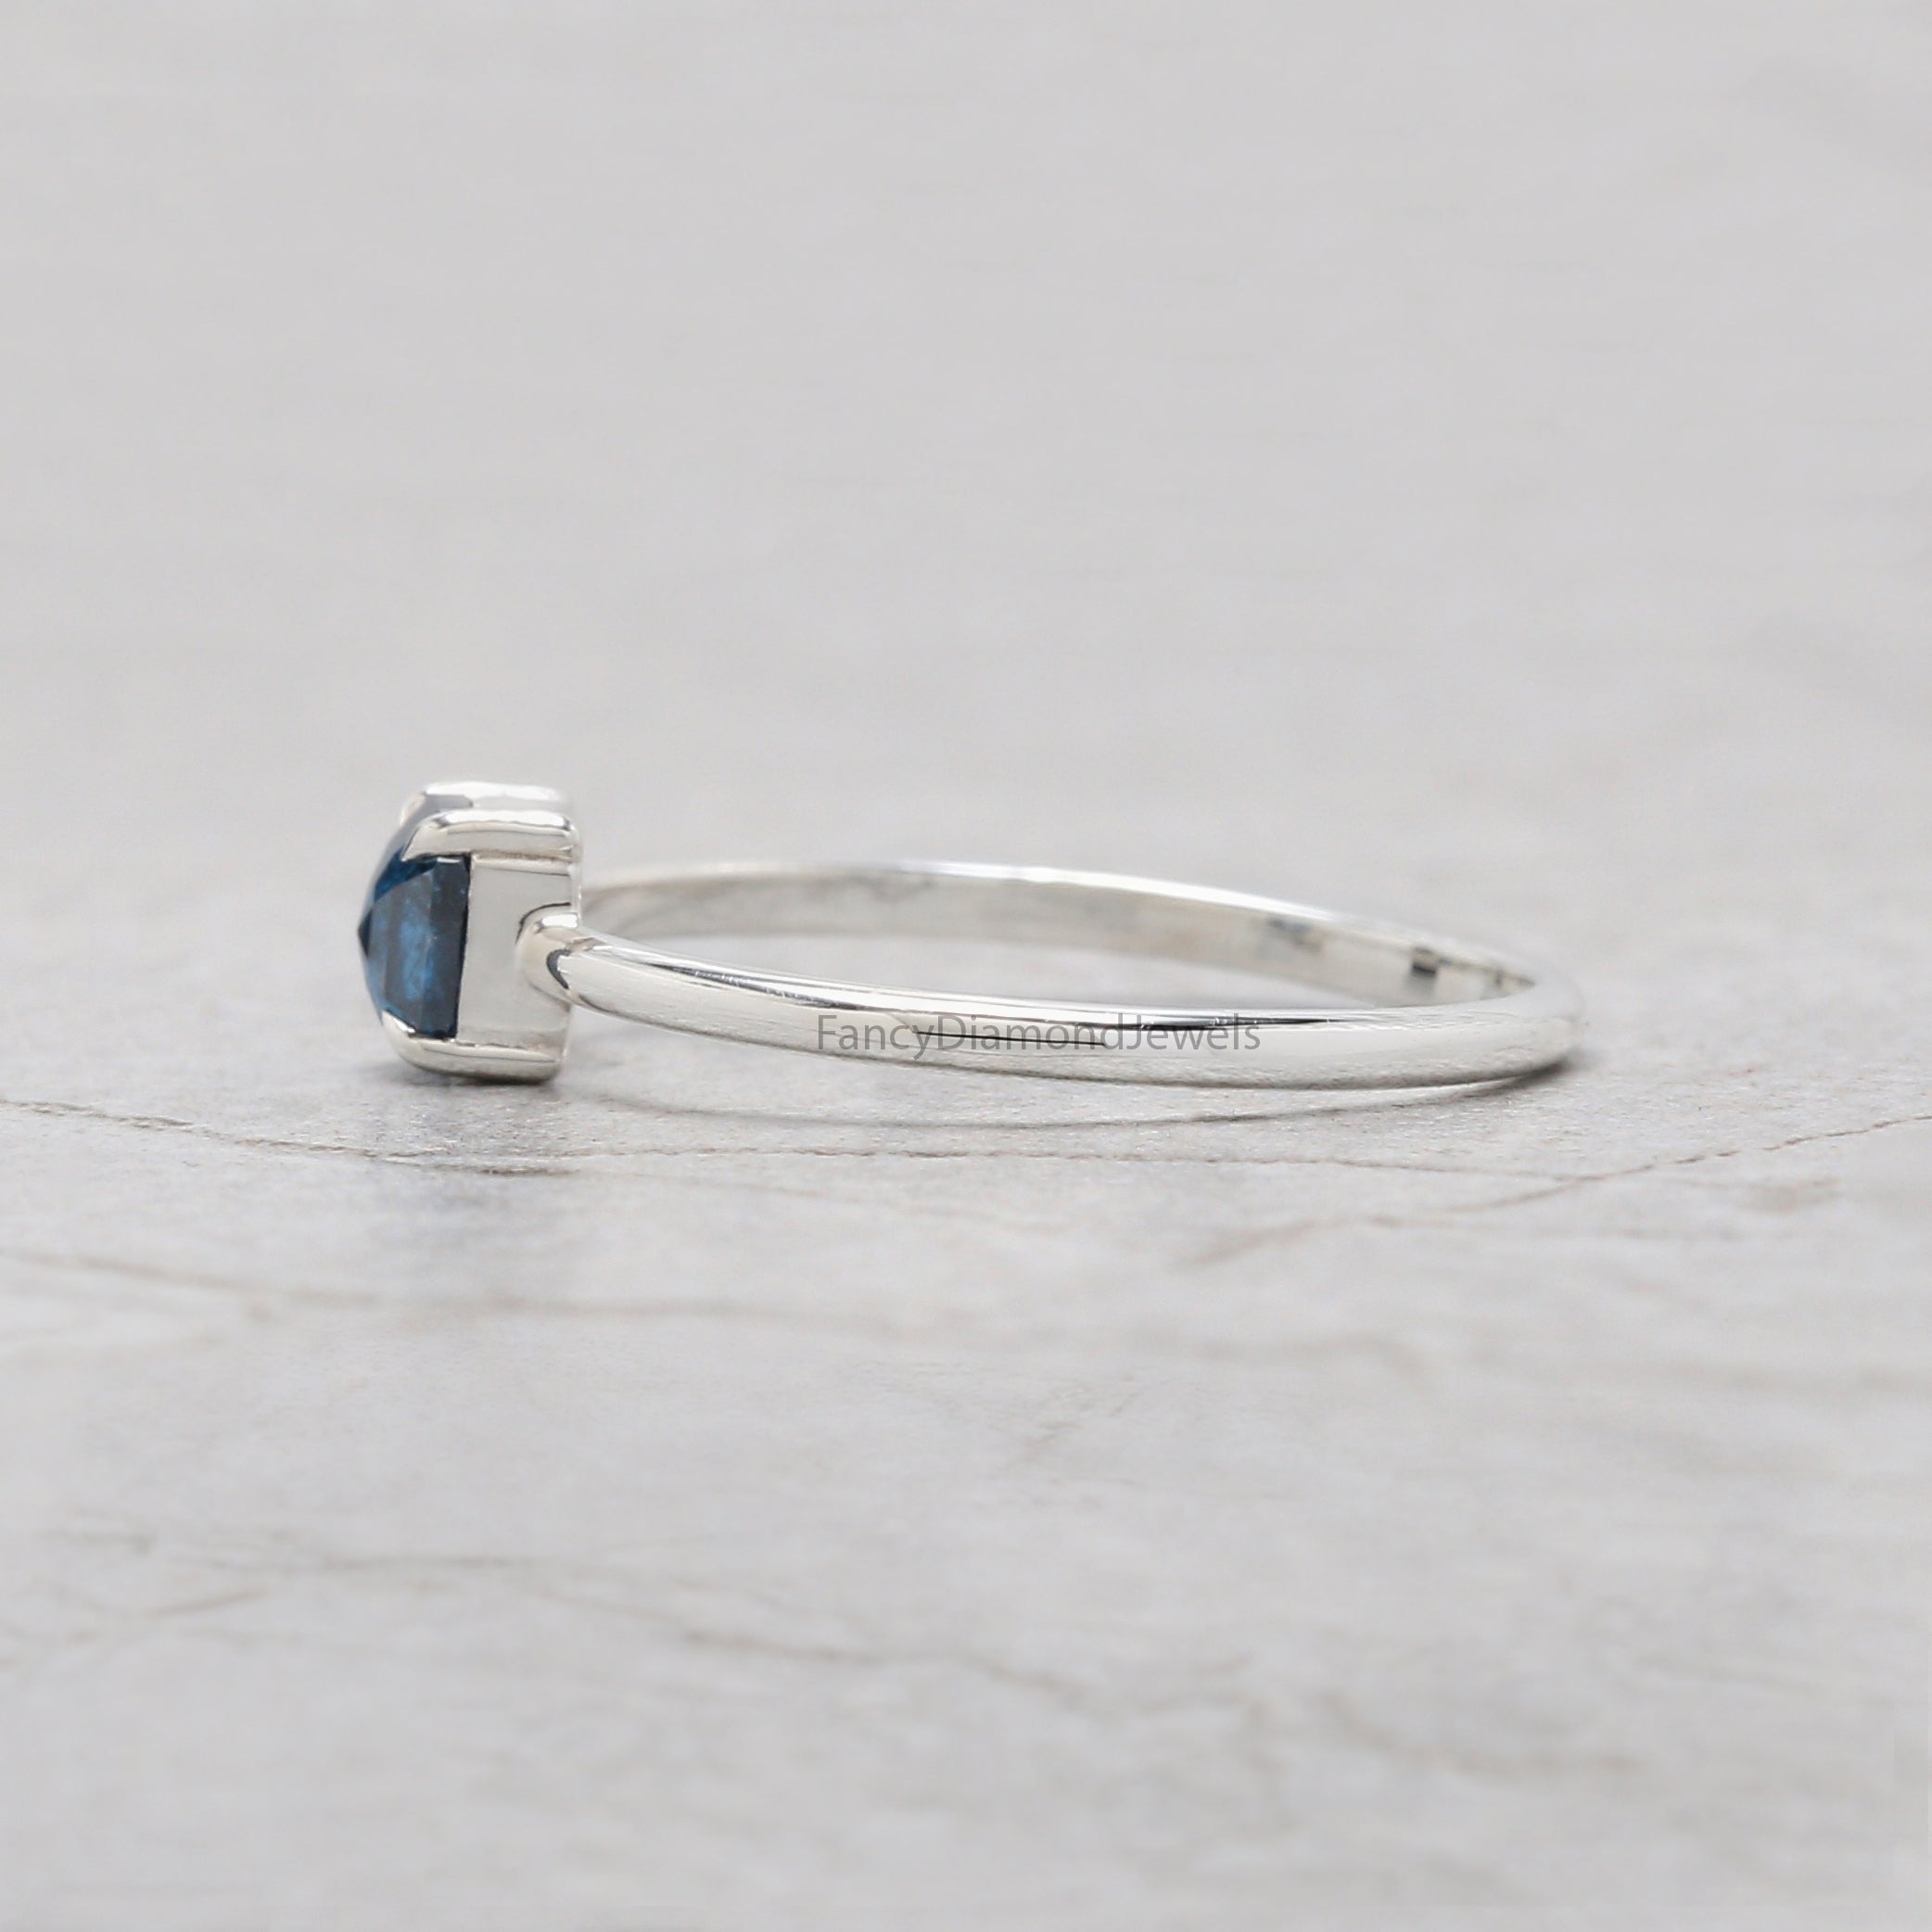 Emerald Diamond Ring, Emerald Engagement Ring, Blue Color Emerald Diamond Ring, Emerald Cut Diamond Ring, Emerald Blue Diamond Ring, KD1156